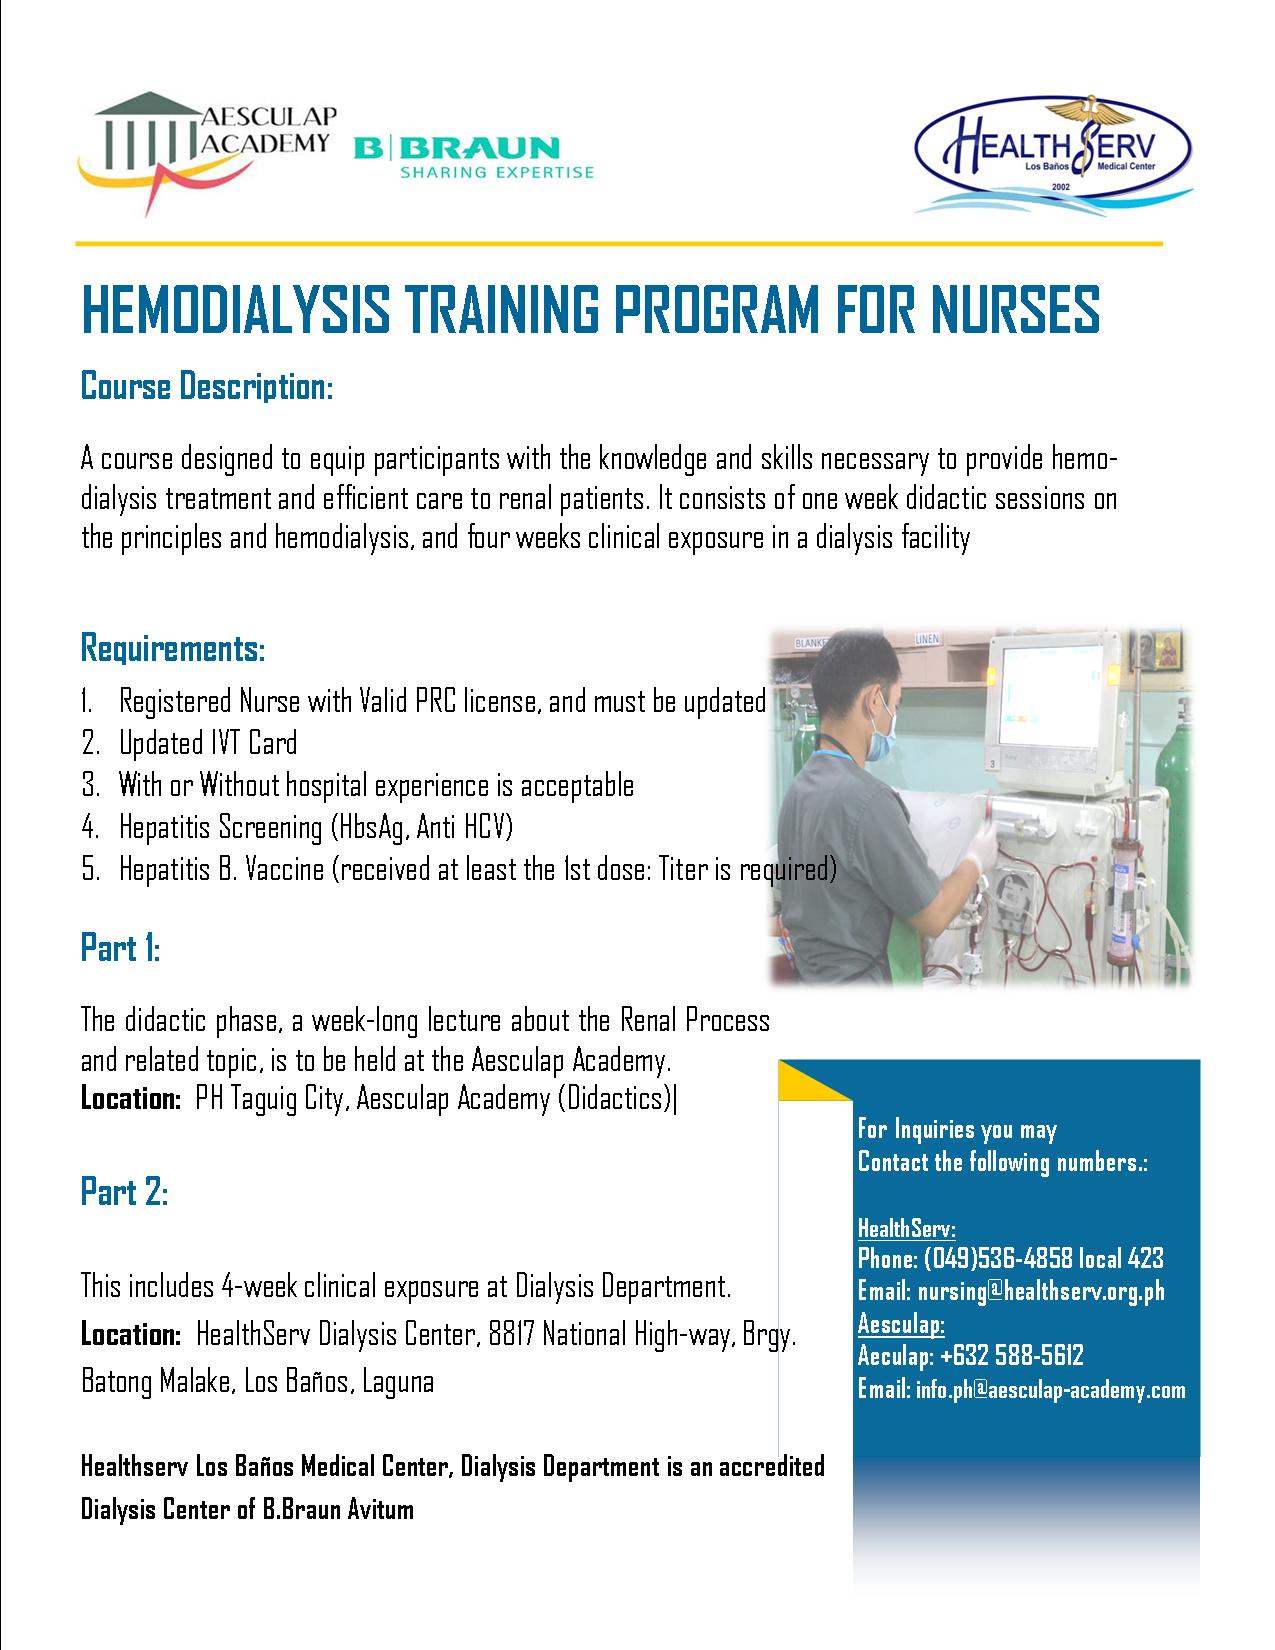 hemodialysis-training-program-for-nurses-healthserv-los-ba-os-medical